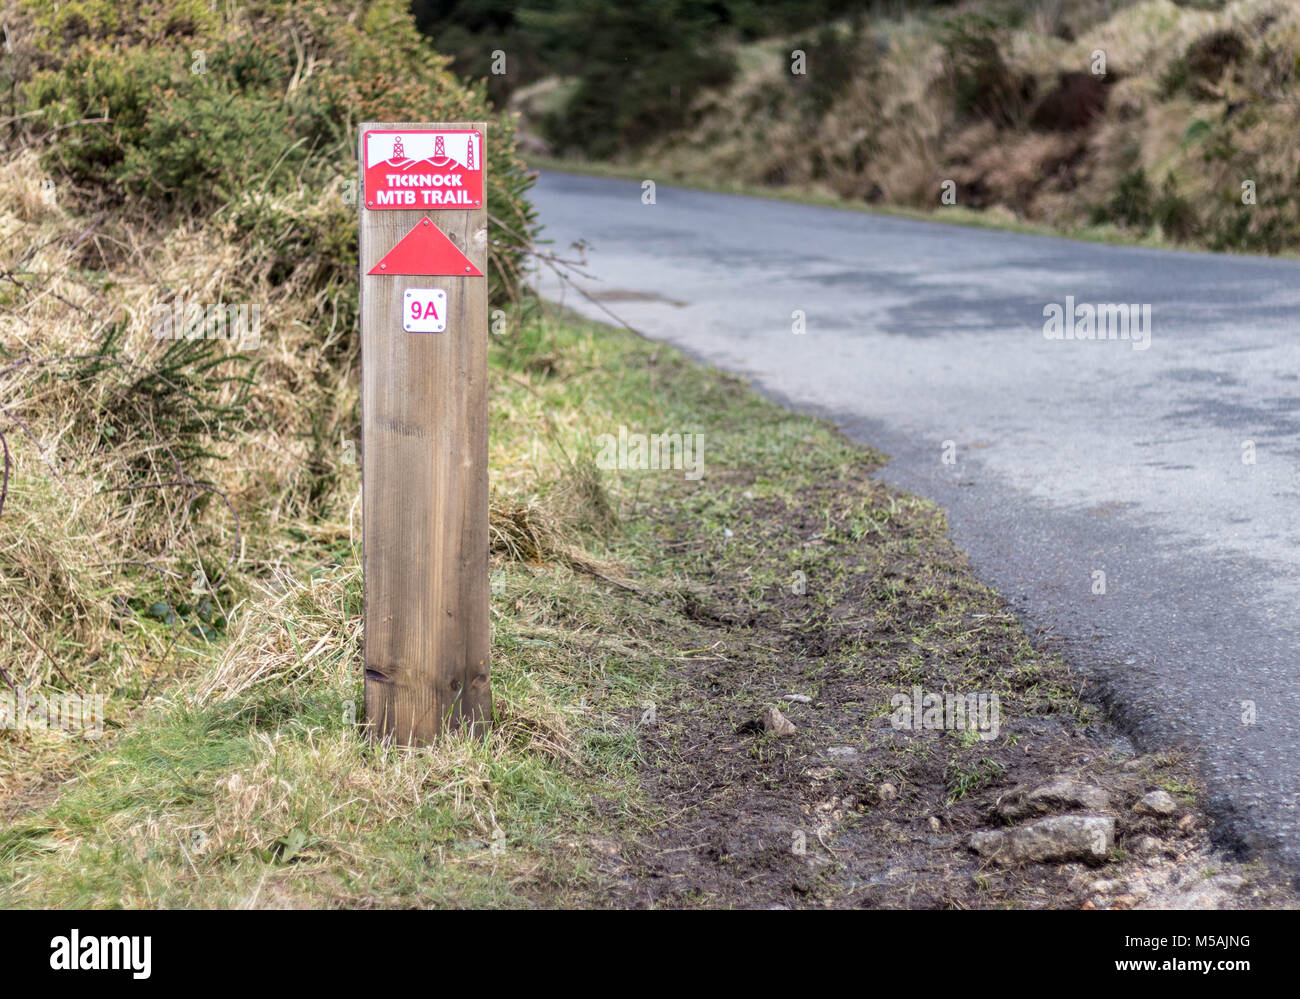 A sign for a mountain bike trail, Ticknock, Dublin. Stock Photo